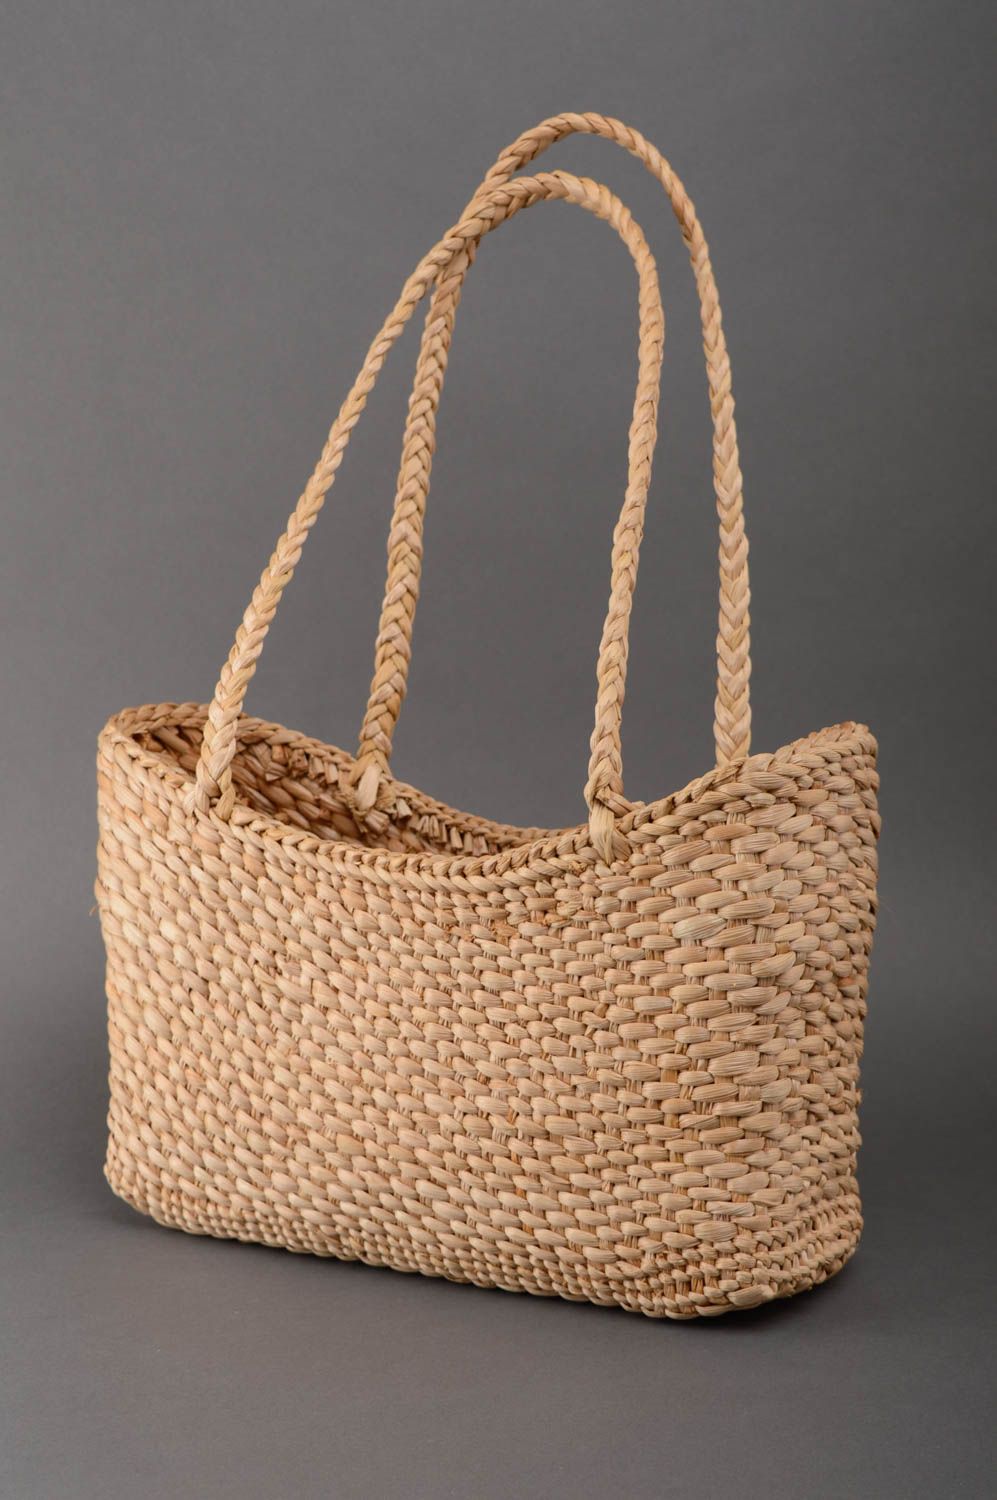 Handmade reedmace basket purse photo 1